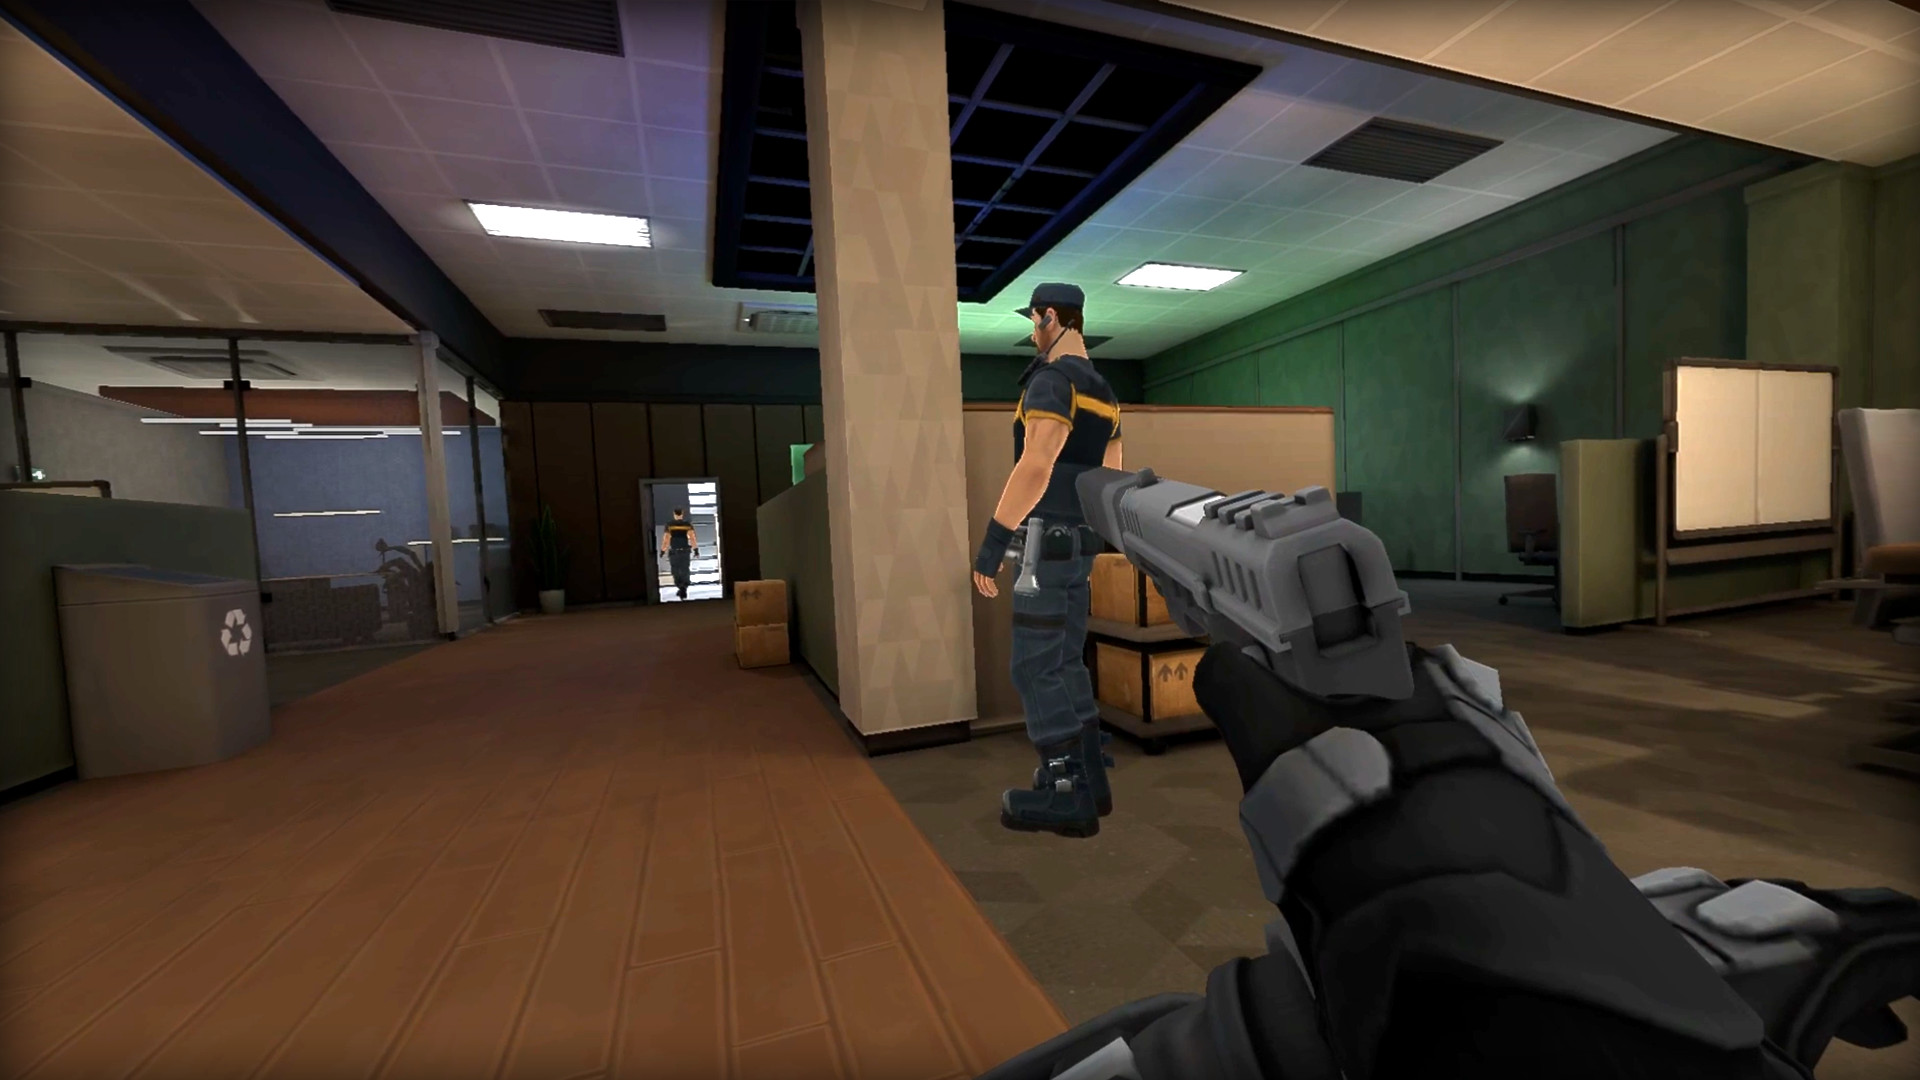 Panther VR Free Download